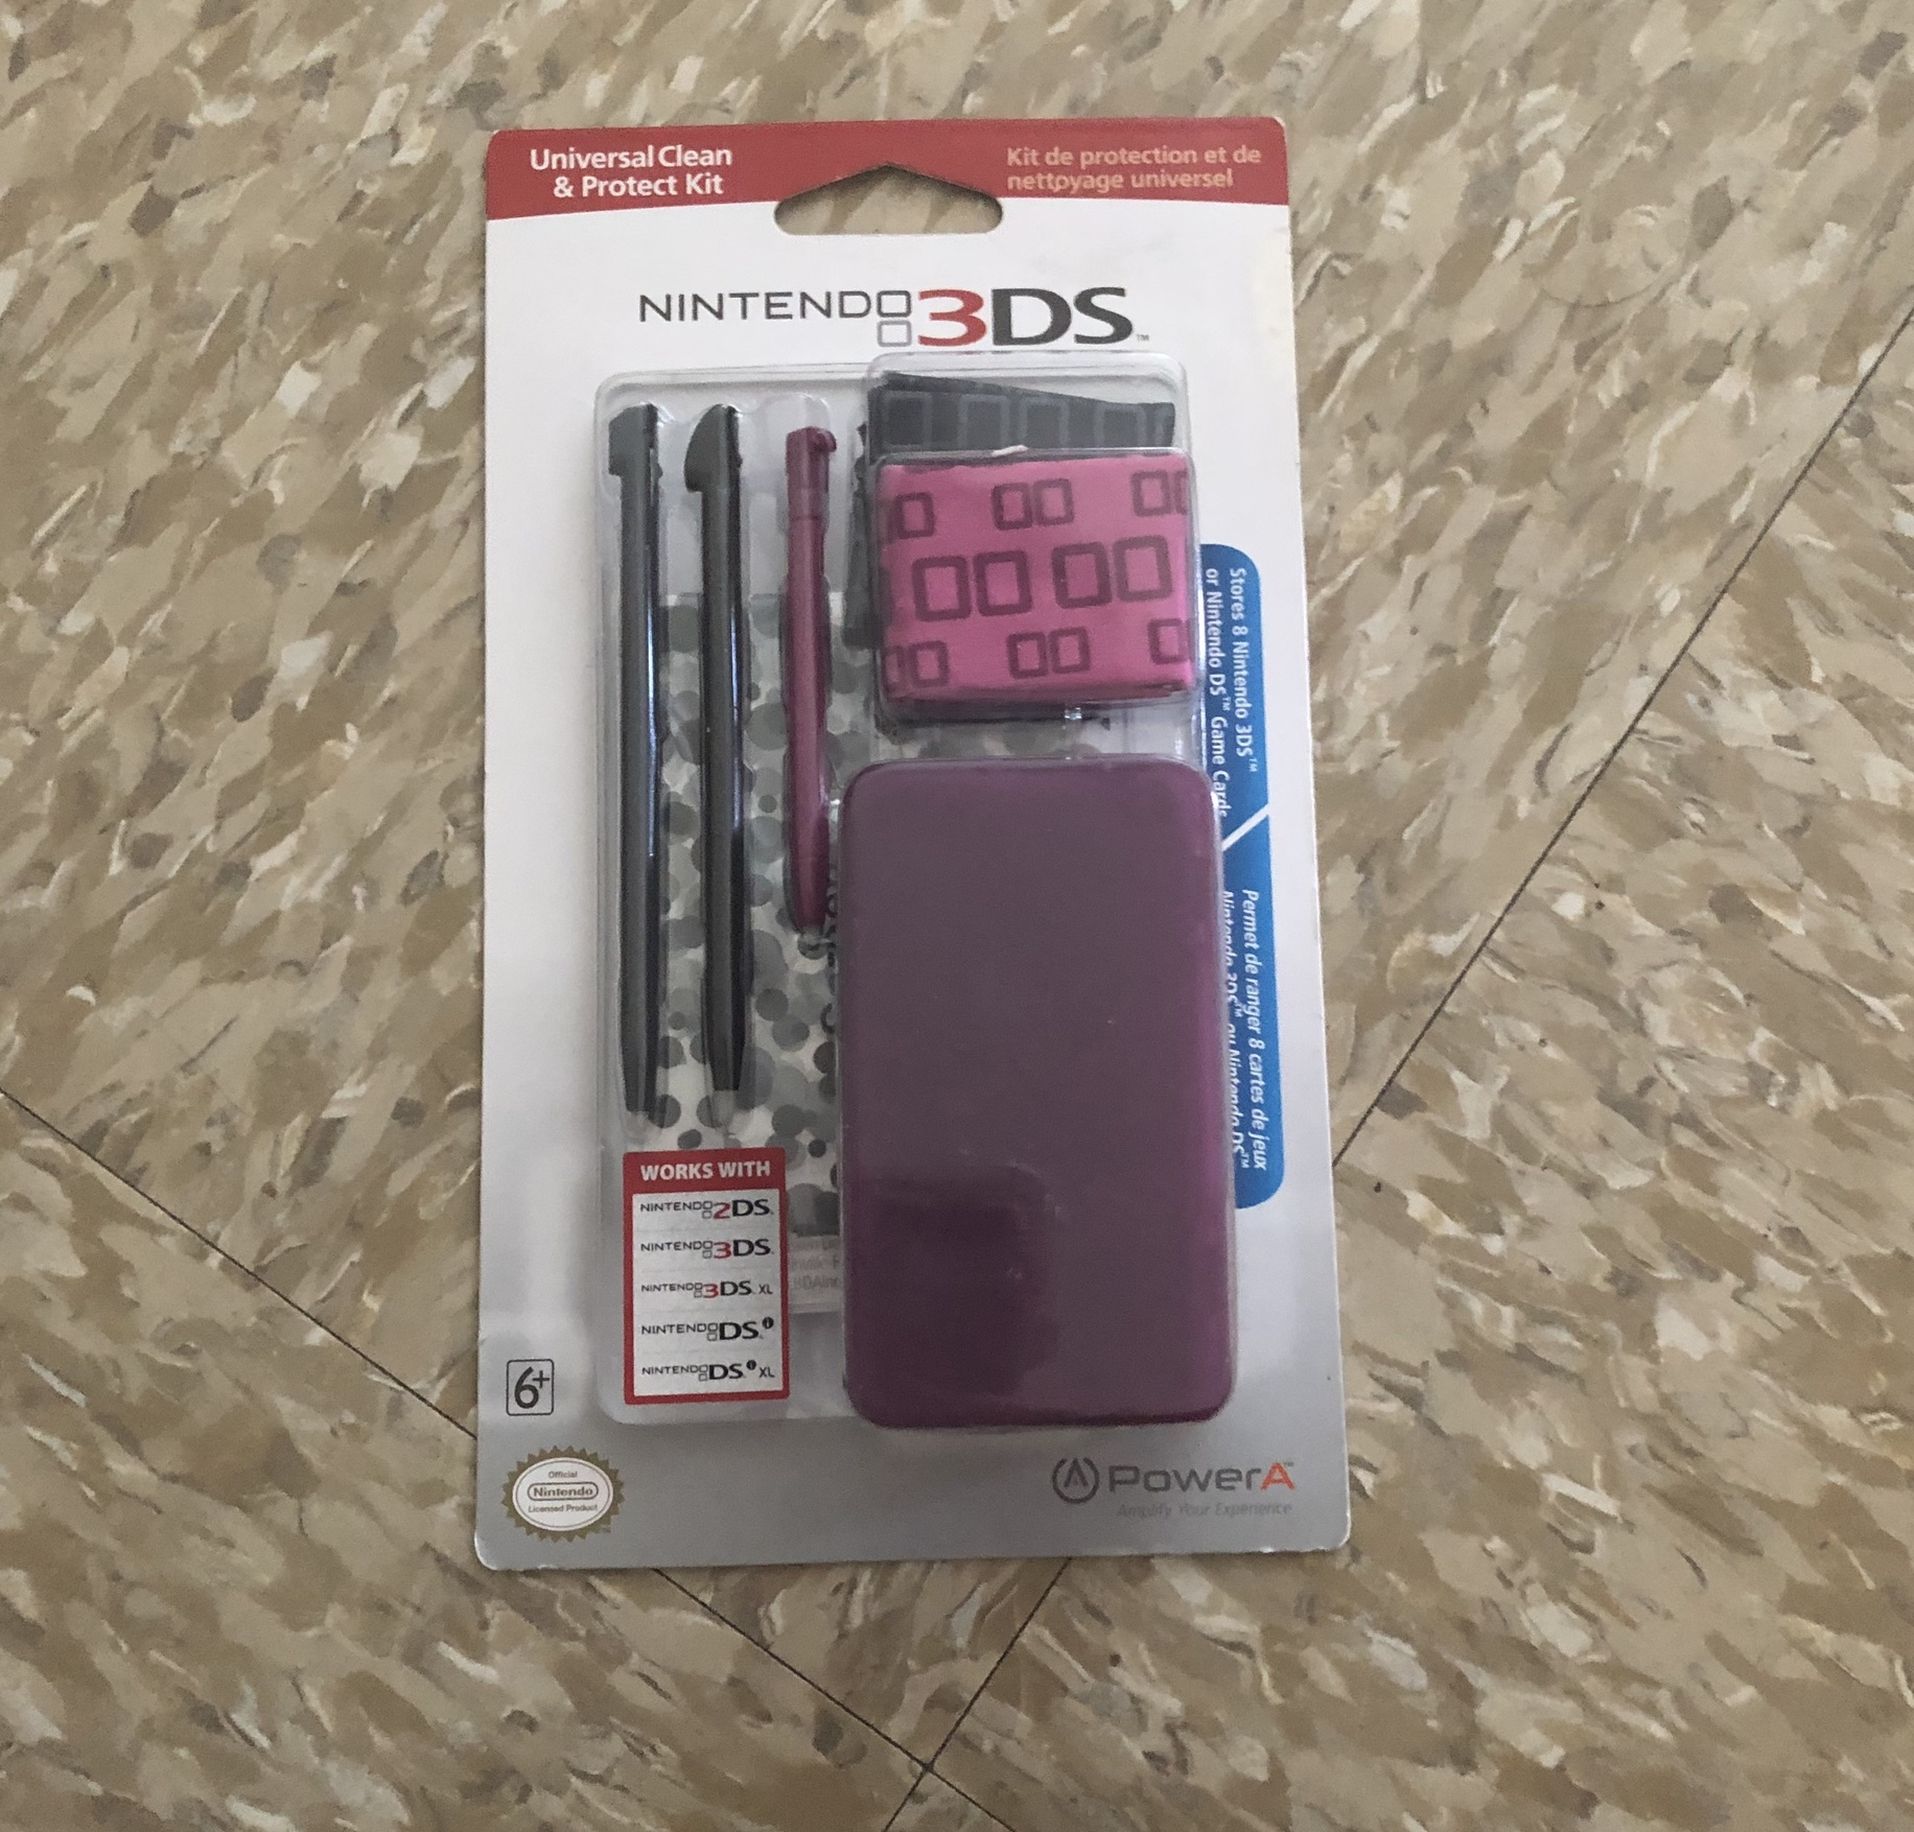 Nintendo 3DS accessories